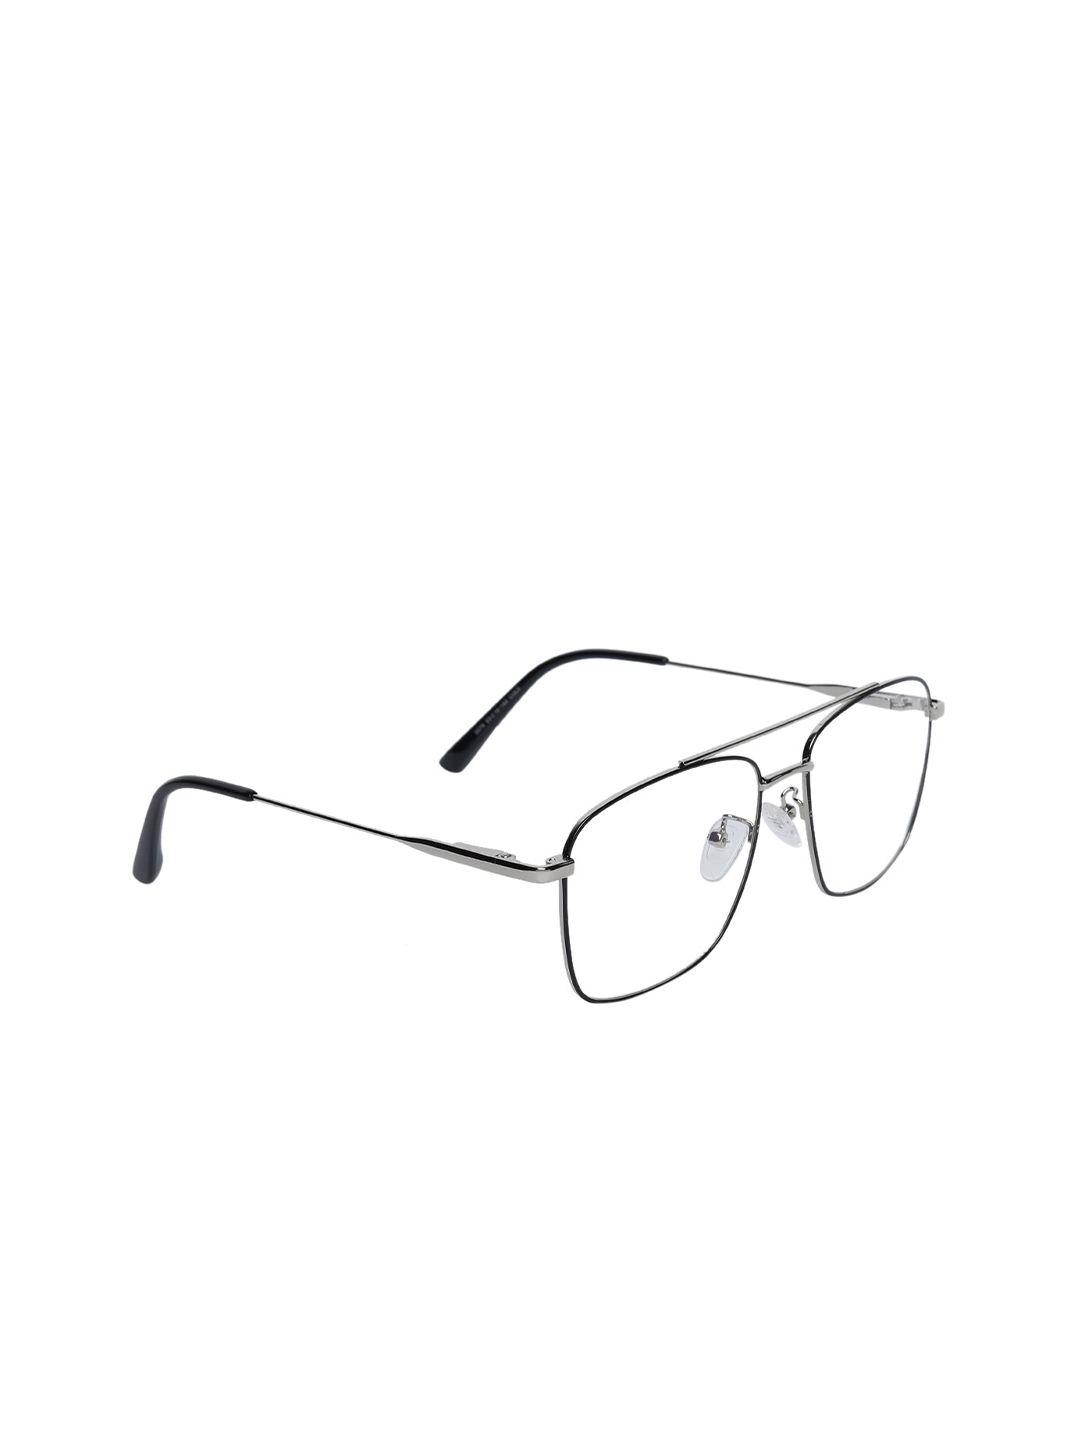 peter jones eyewear unisex silver-toned & black square blue light blocking glasses